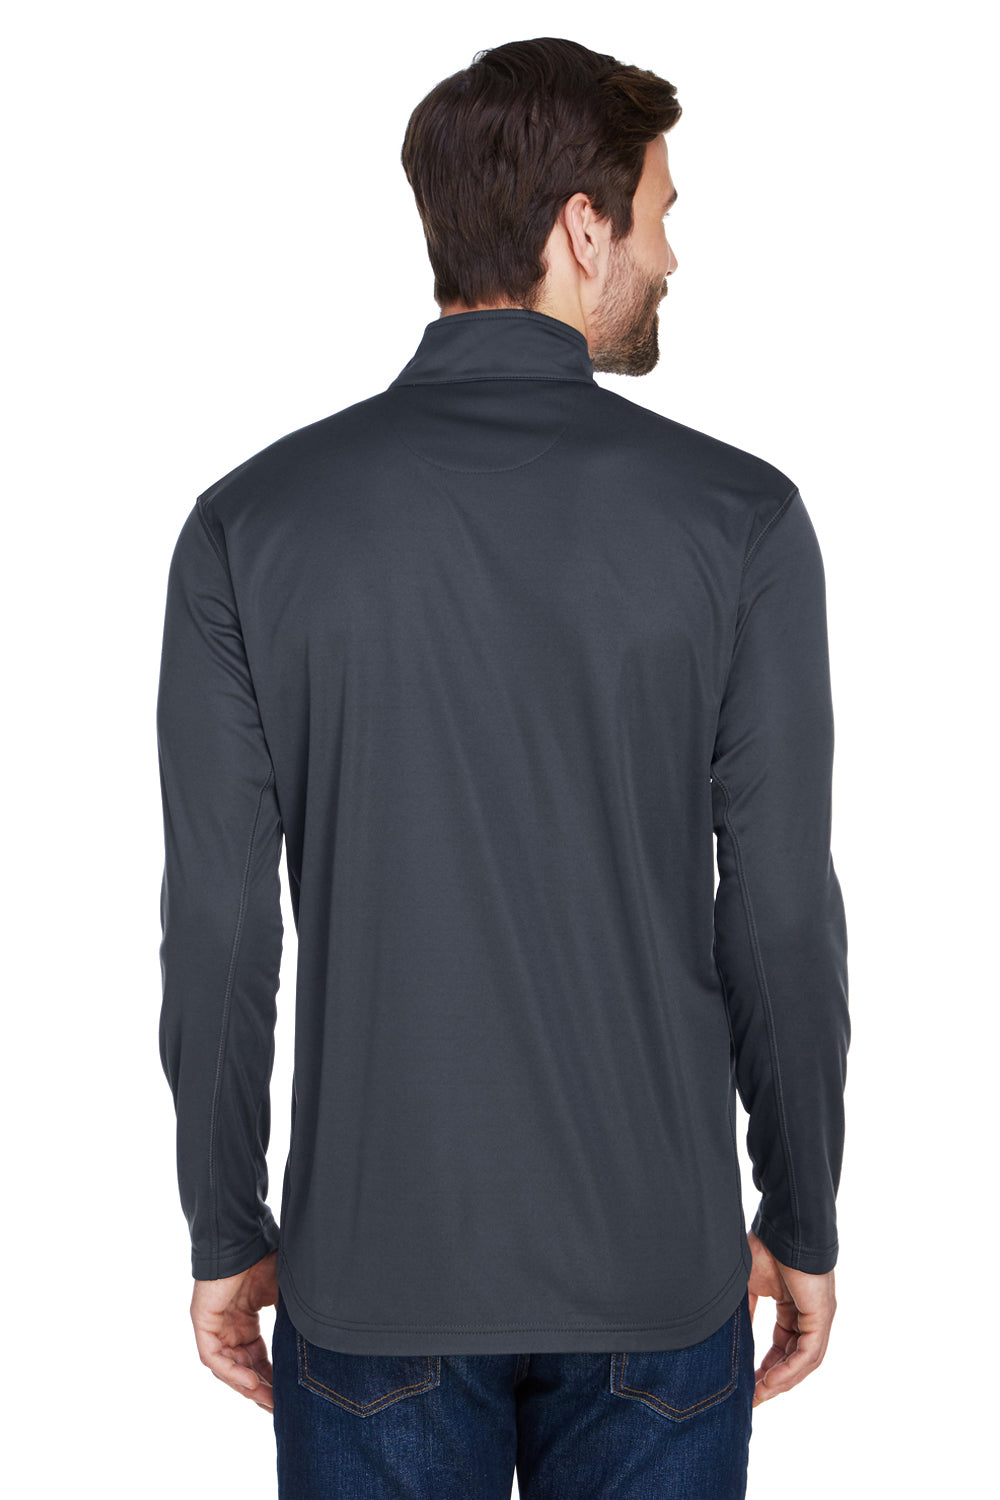 UltraClub 8230 Mens Cool & Dry Moisture Wicking 1/4 Zip Sweatshirt Black Back